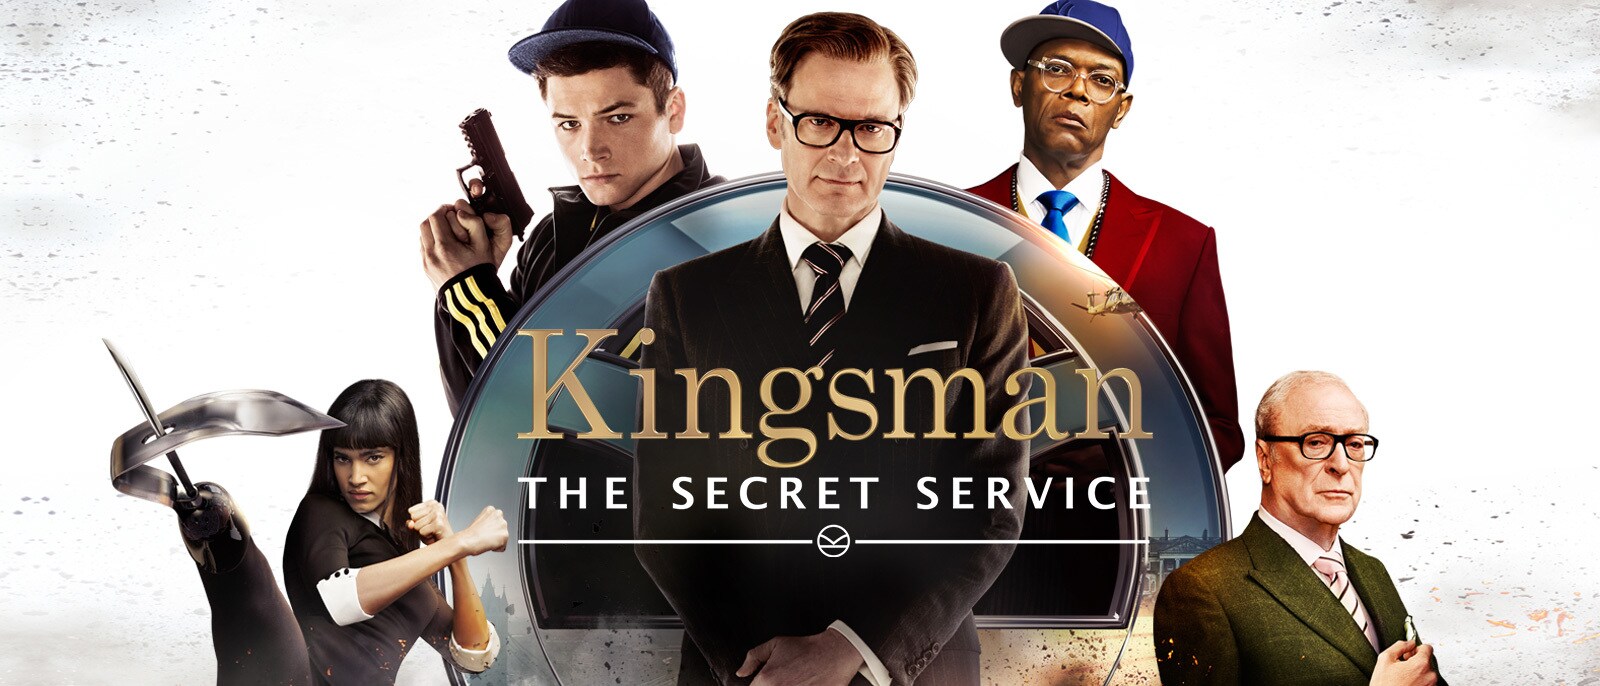 watch kingsman 2 online free 123movies